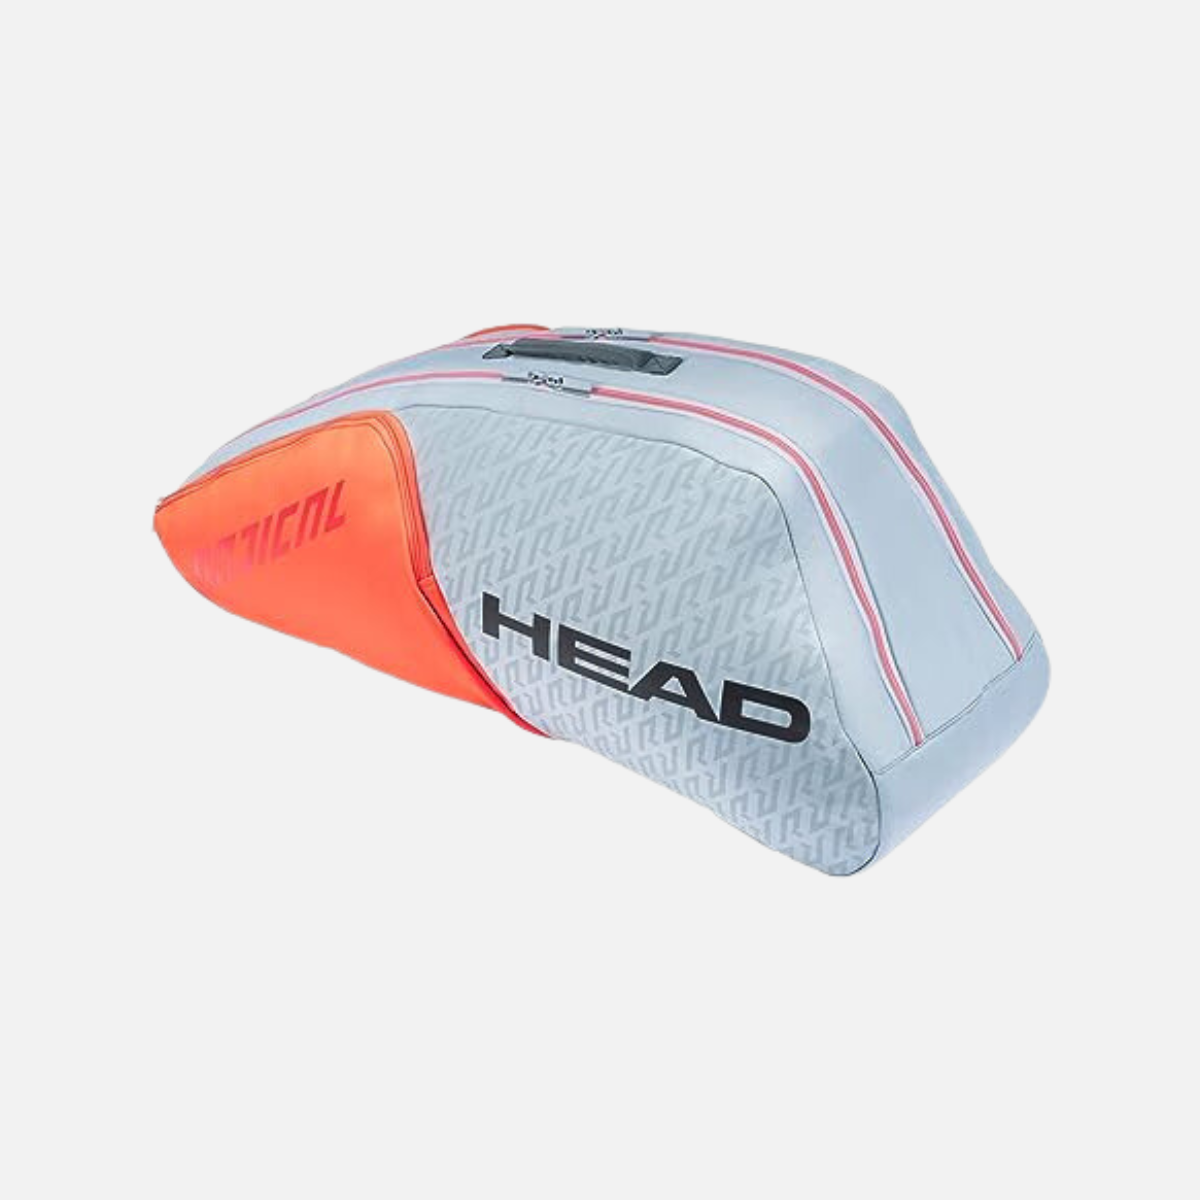 HEAD Radical 6R Combi Kit Bag -Grey/Orange